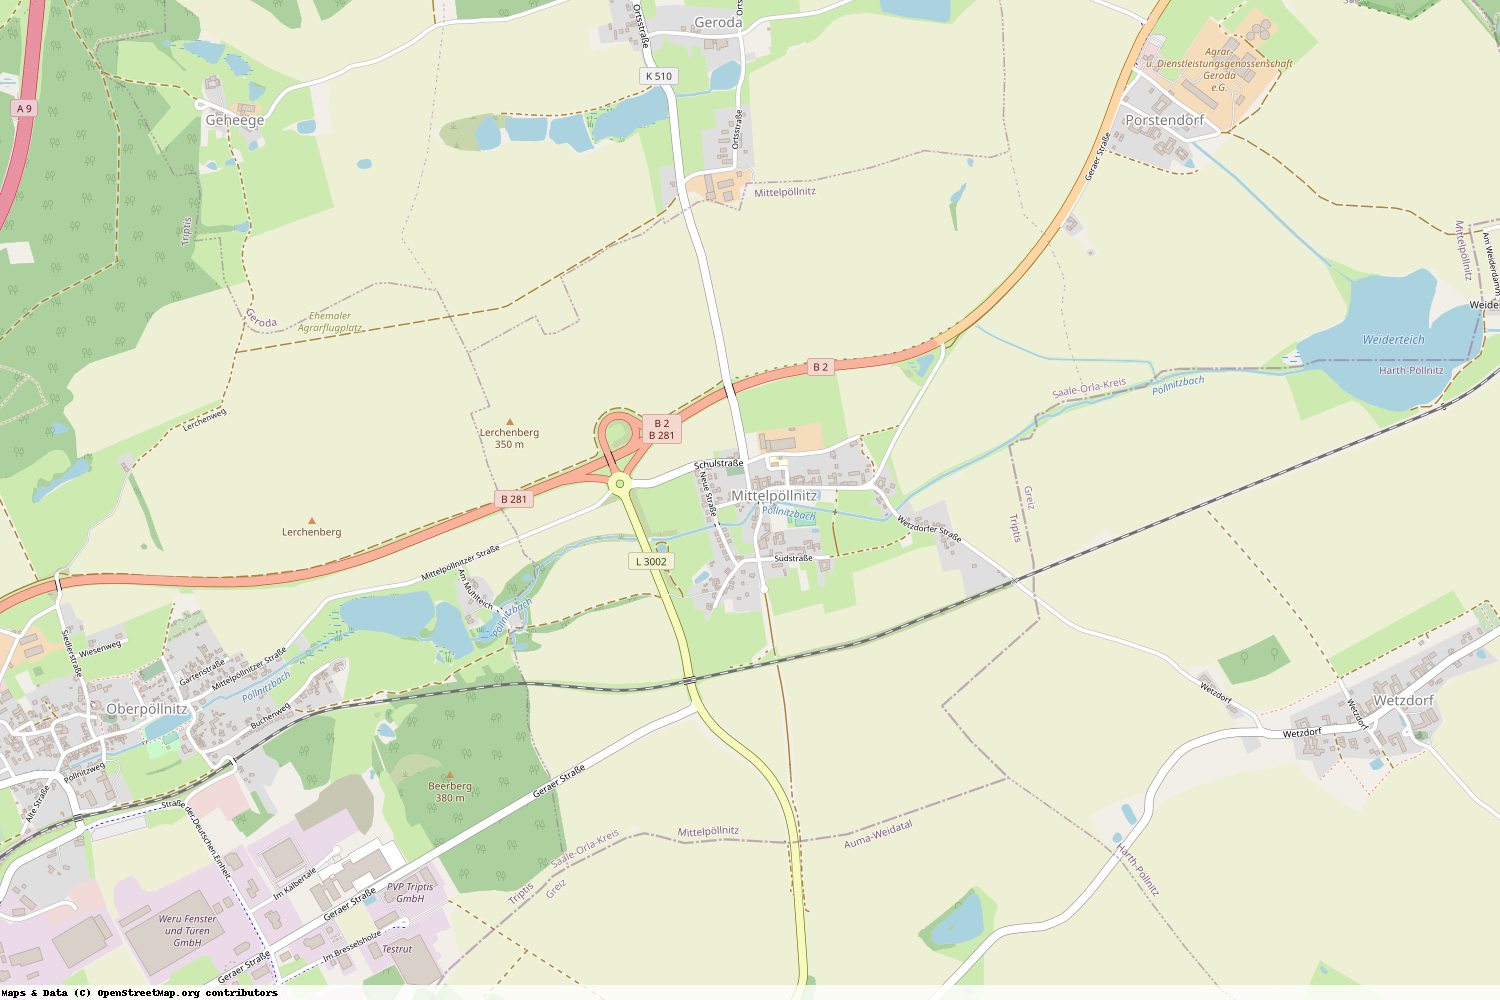 Ist gerade Stromausfall in Thüringen - Saale-Orla-Kreis - Mittelpöllnitz?